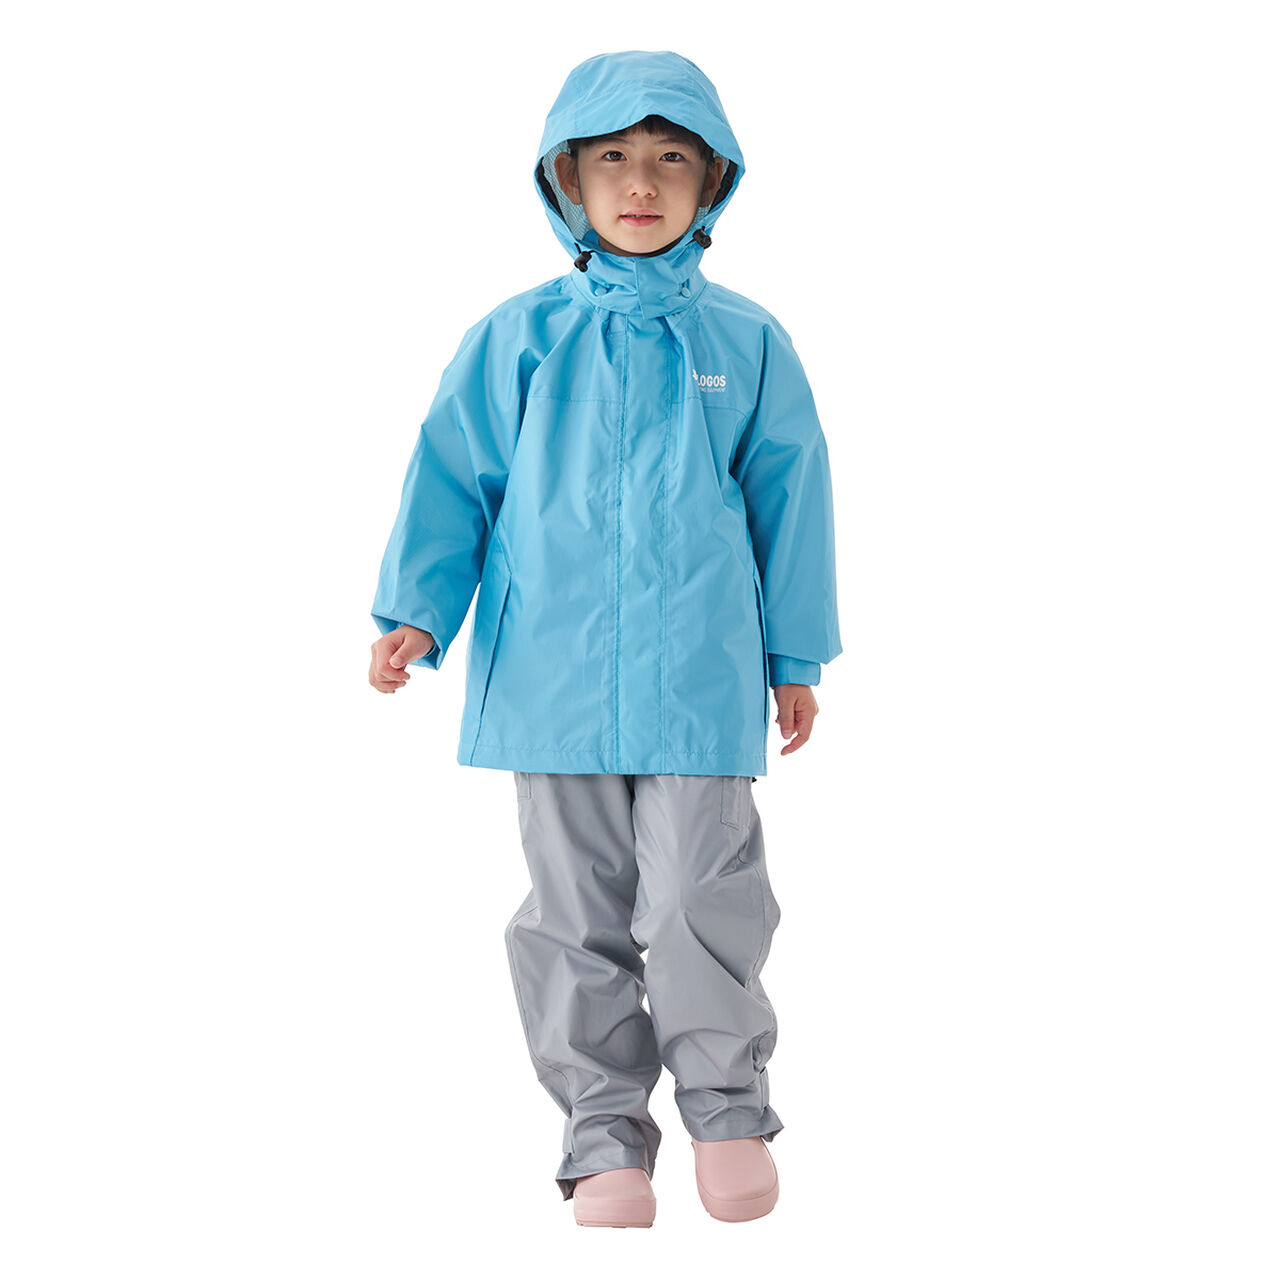 LOGOS Kids' Rain Suits,Blue, large image number 11